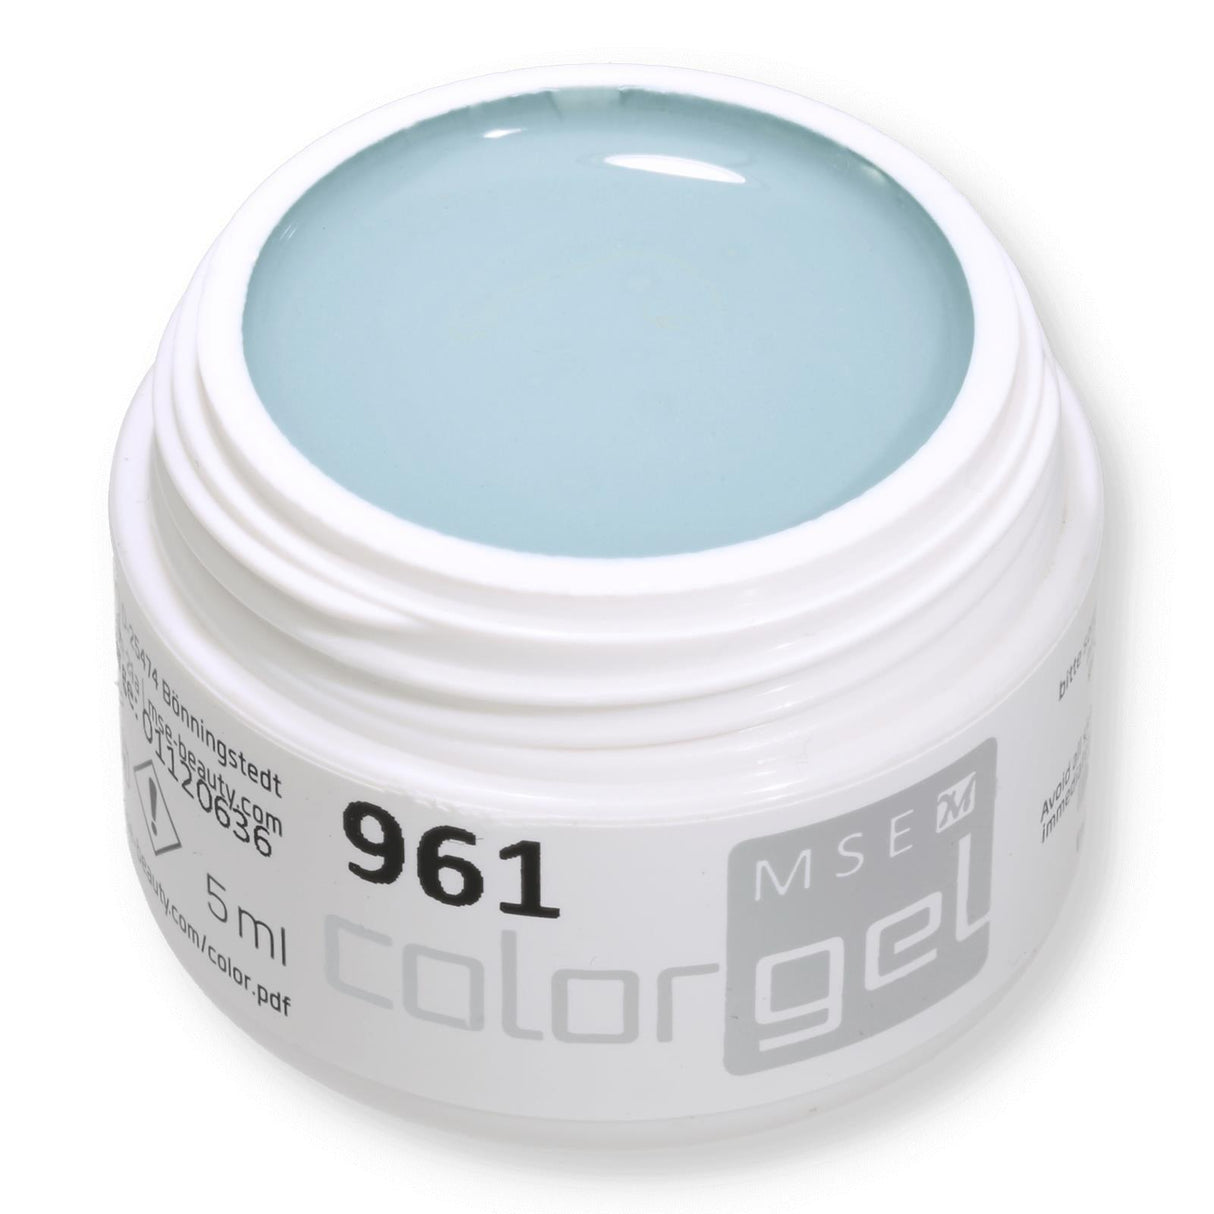 #961 PURE Farbgel 5ml grün grau - MSE - The Beauty Company